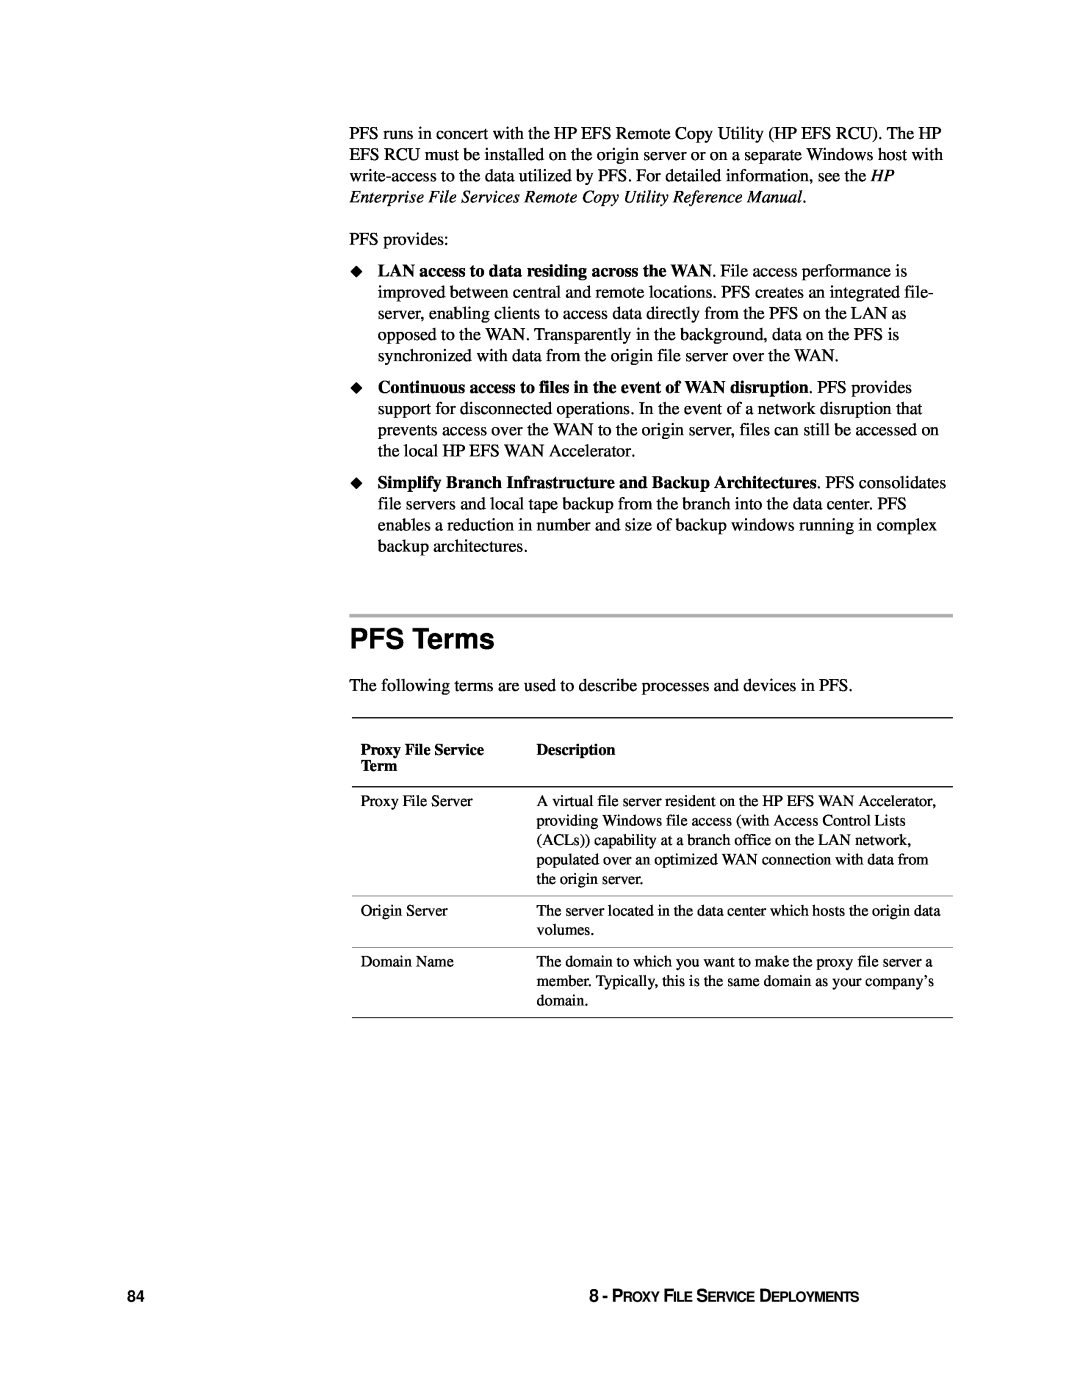 HP Enterprise File Services WAN Accelerator manual PFS Terms, PFS provides 